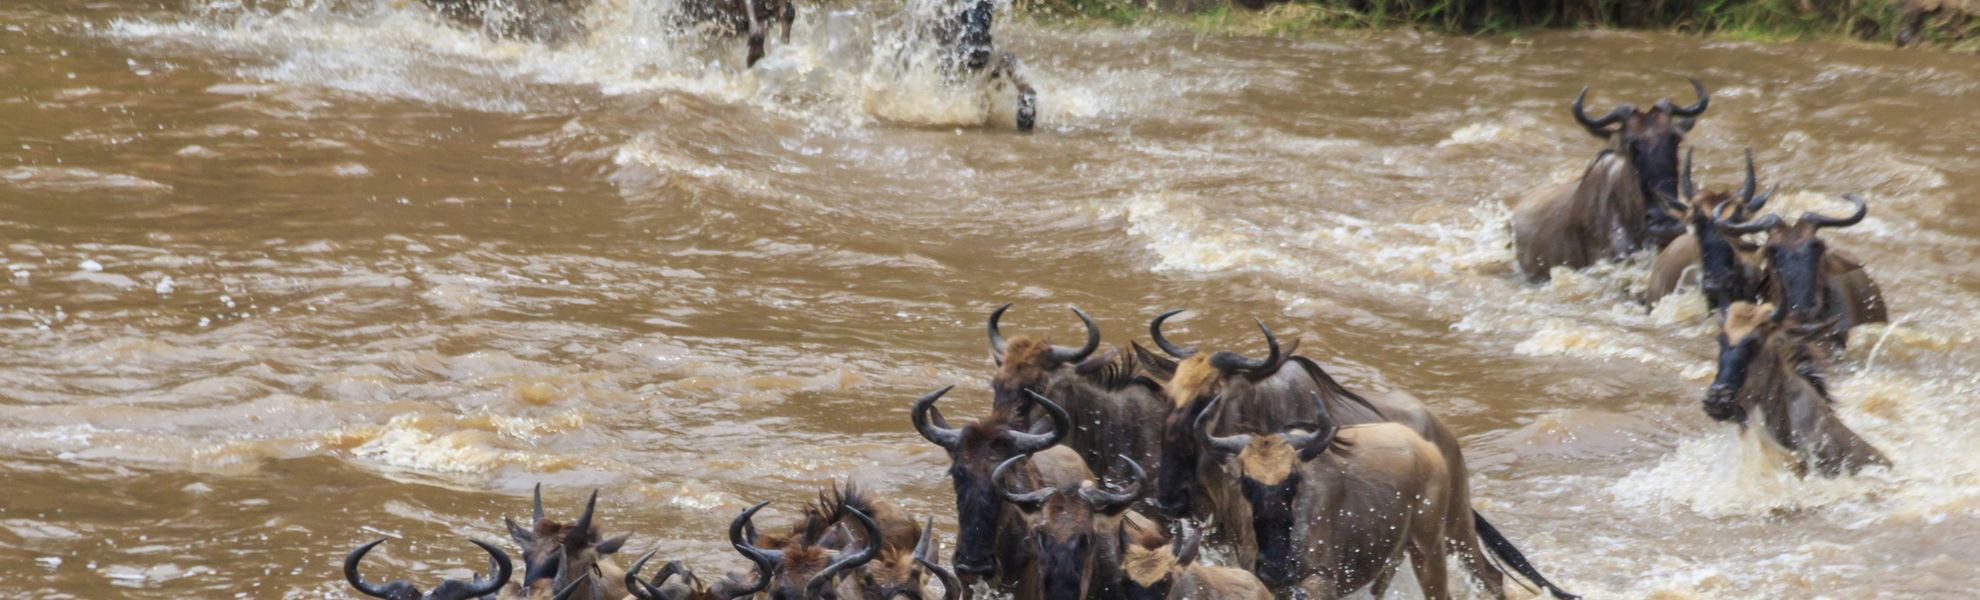 Wildebeest crossing the Mara river in Serengeti national park, Tanzania, great Migration